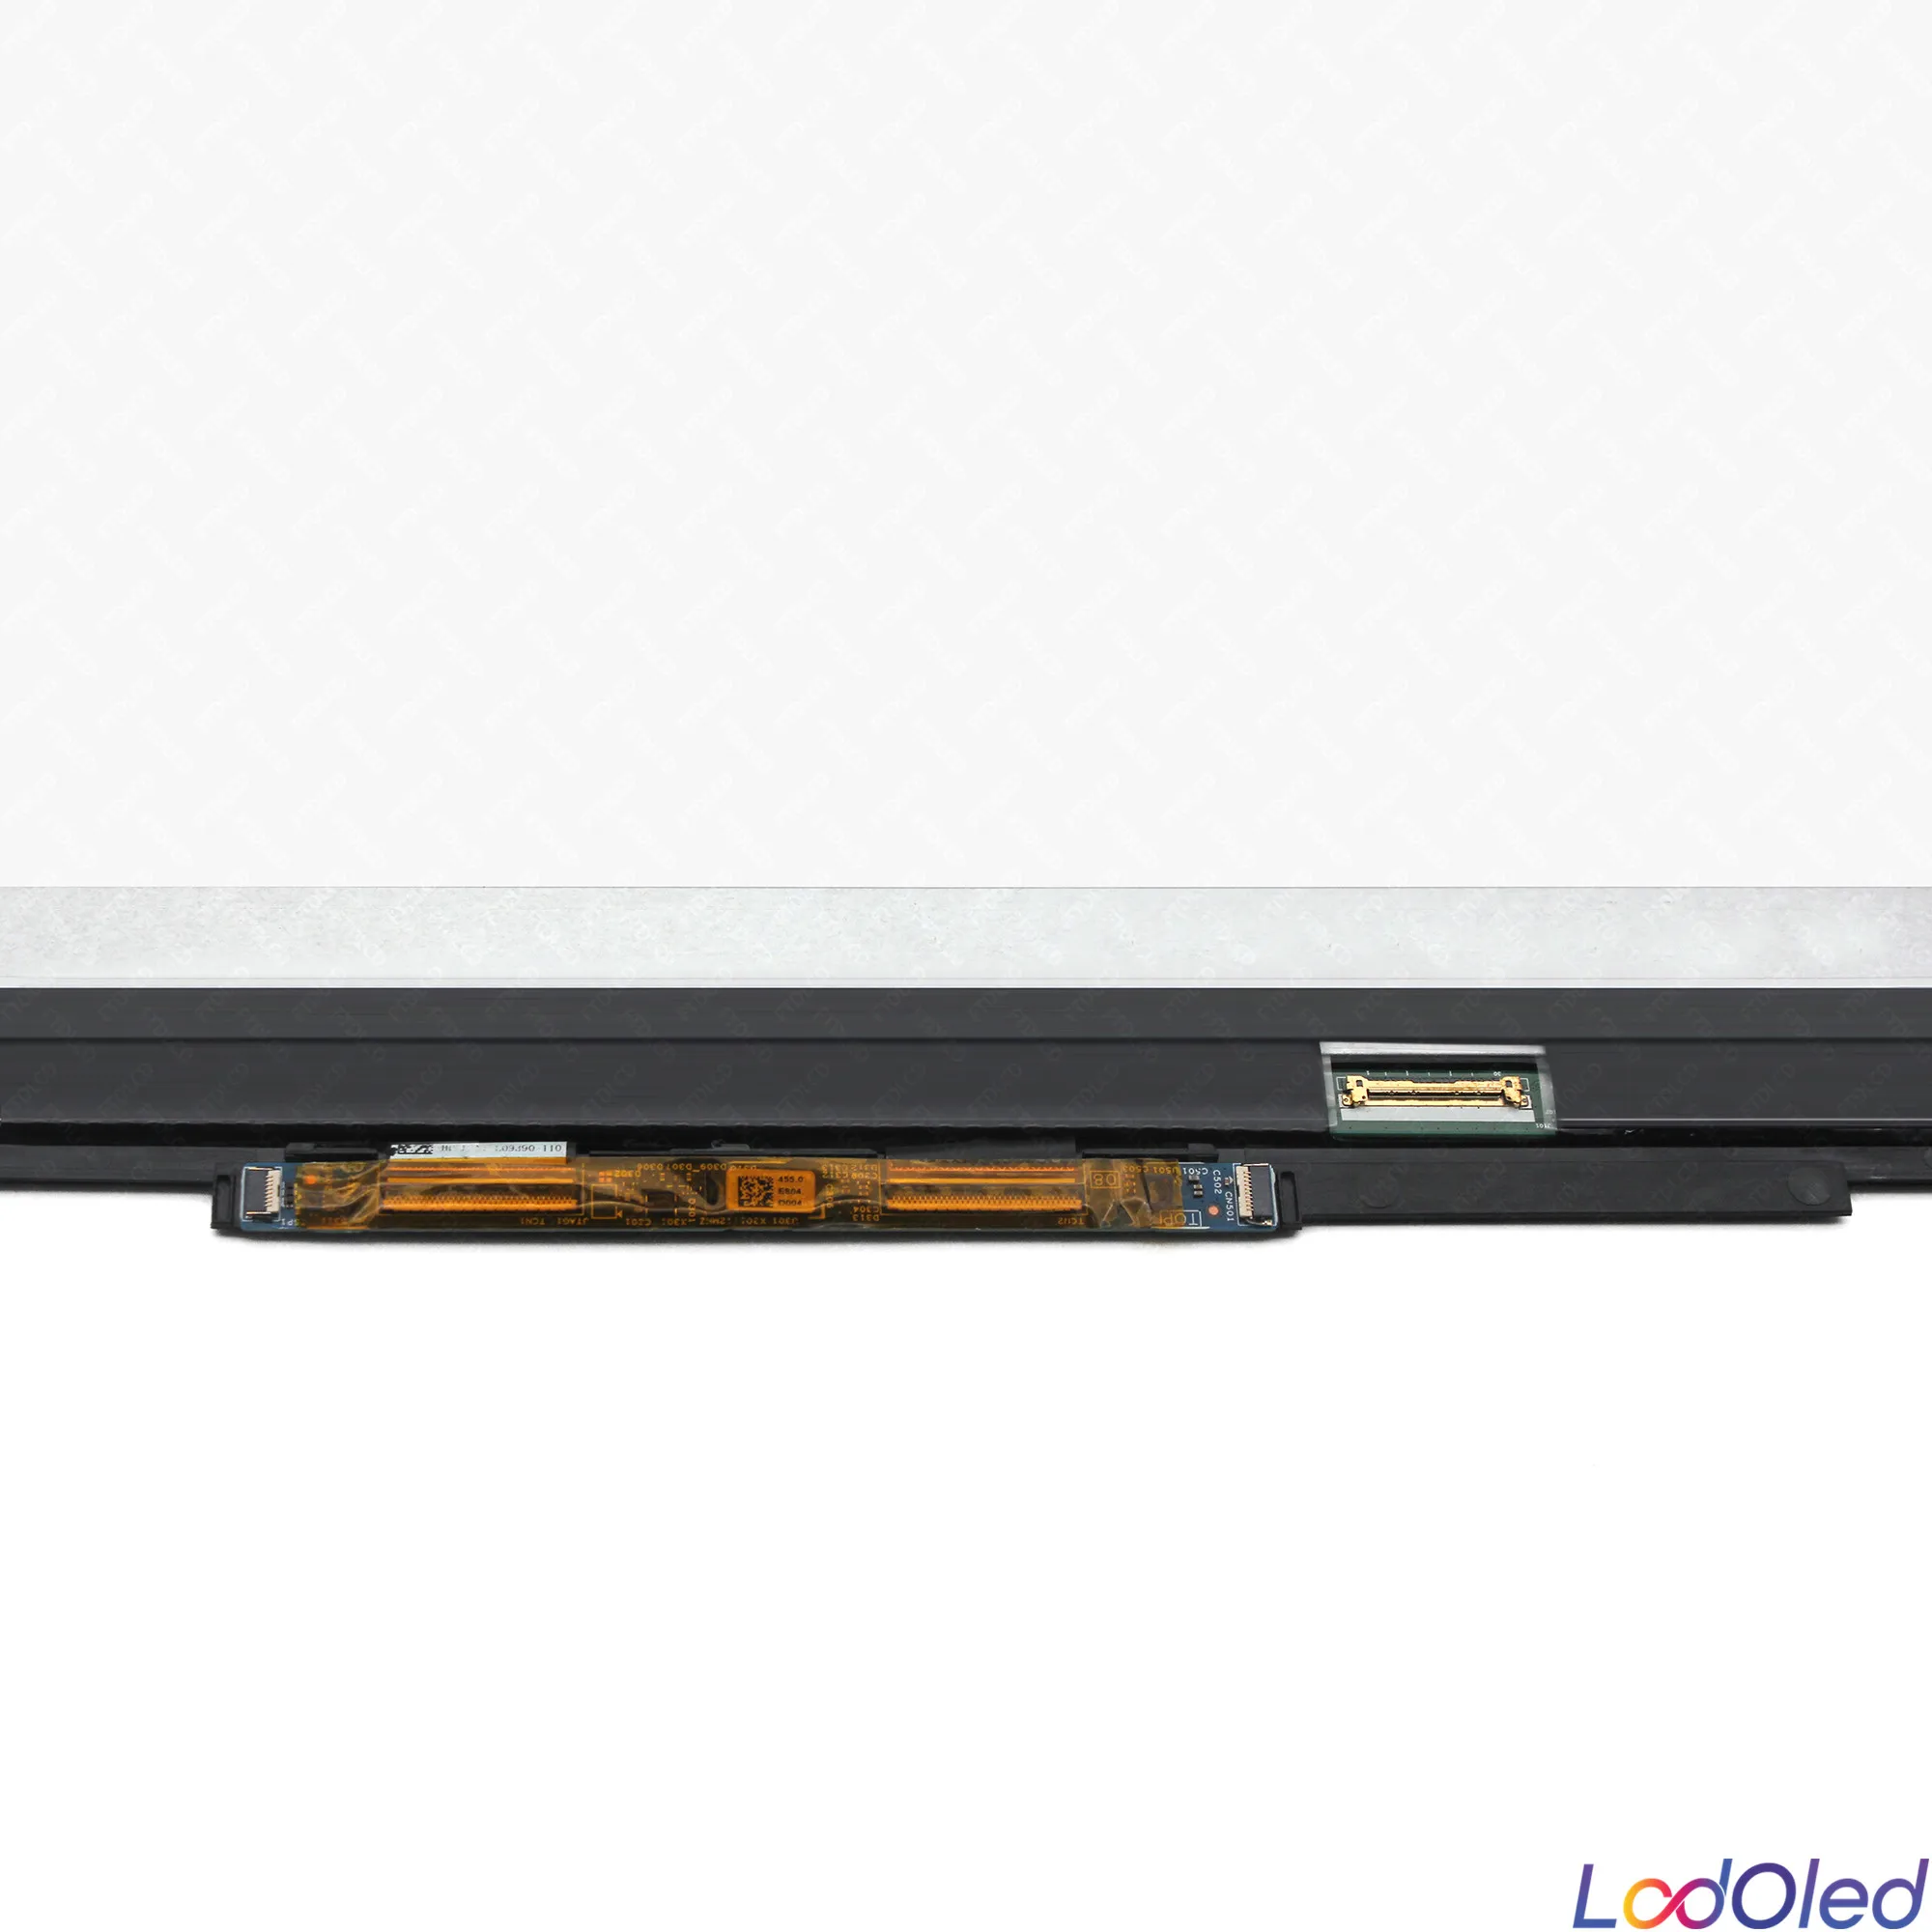 LCD Ekranas Touch Stiklas, skaitmeninis keitiklis Asamblėjos HP Pavilion 15-cr0075nr 15-cr0011nr 15-cr0544nz 15-cr0566nz 15-cr0002nf